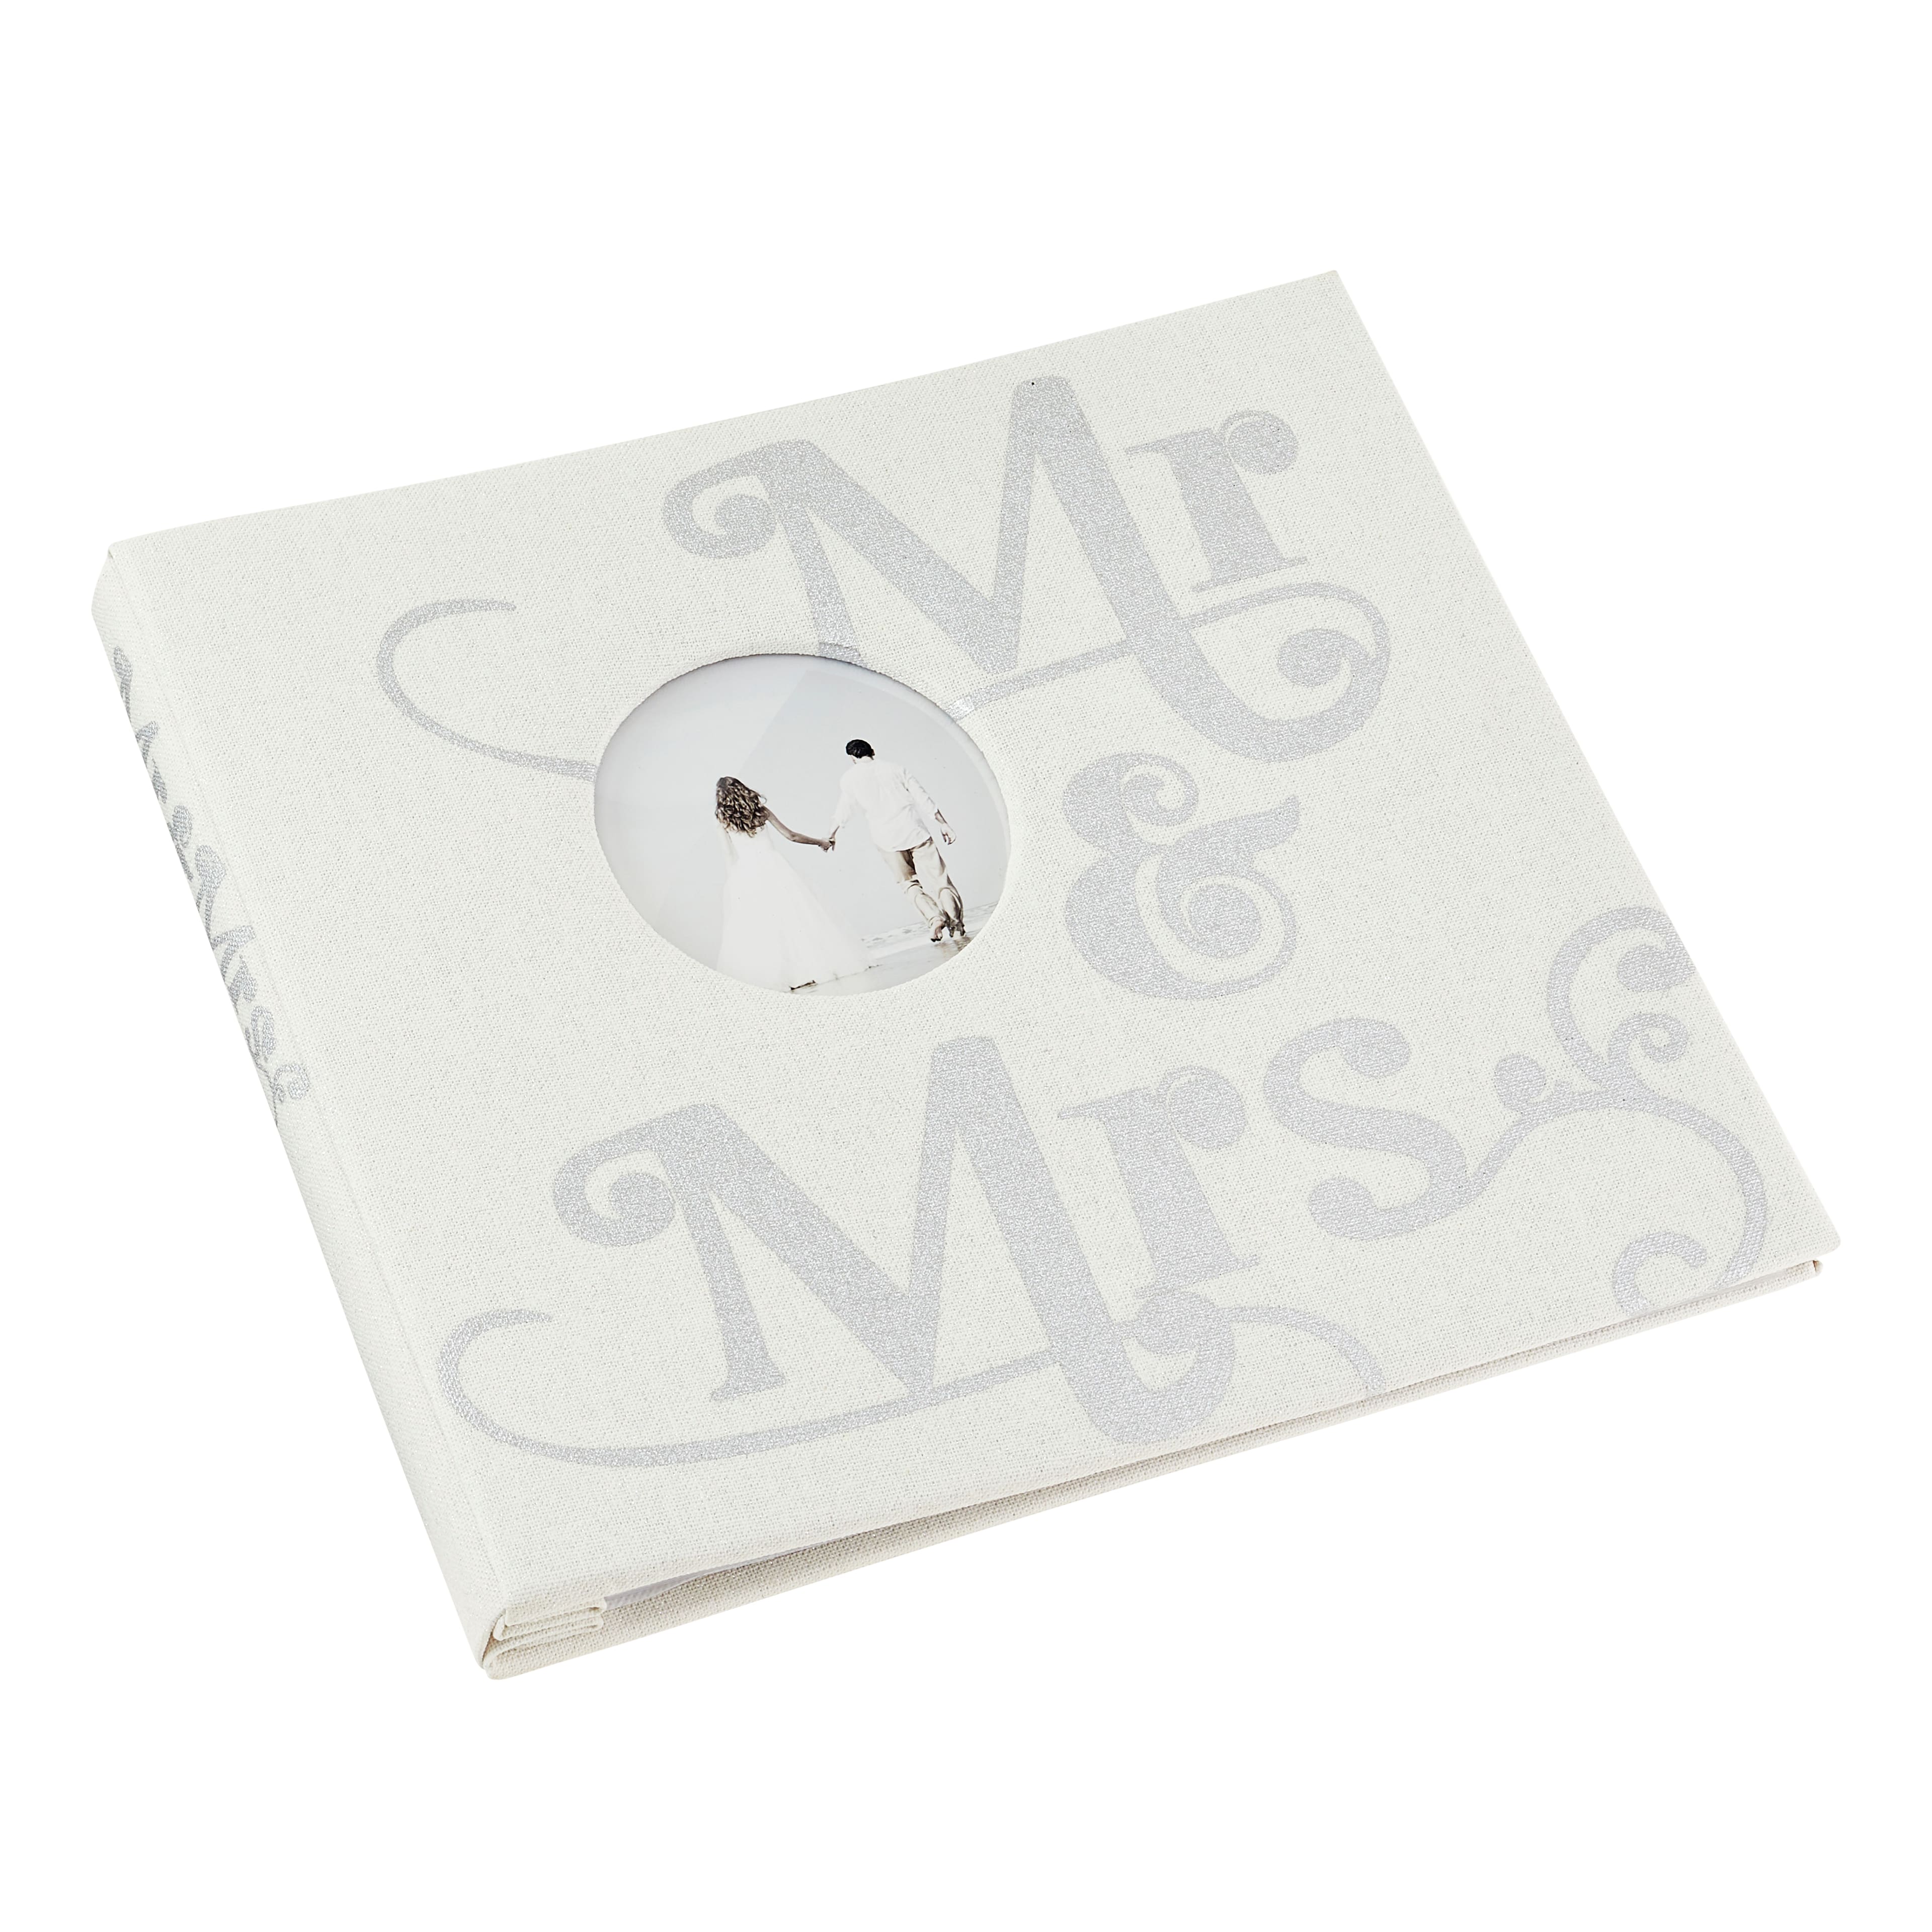 Mr & Mrs - Modern Wedding Scrapbook Paper 12x12 by Reminisce - 5 Sheets